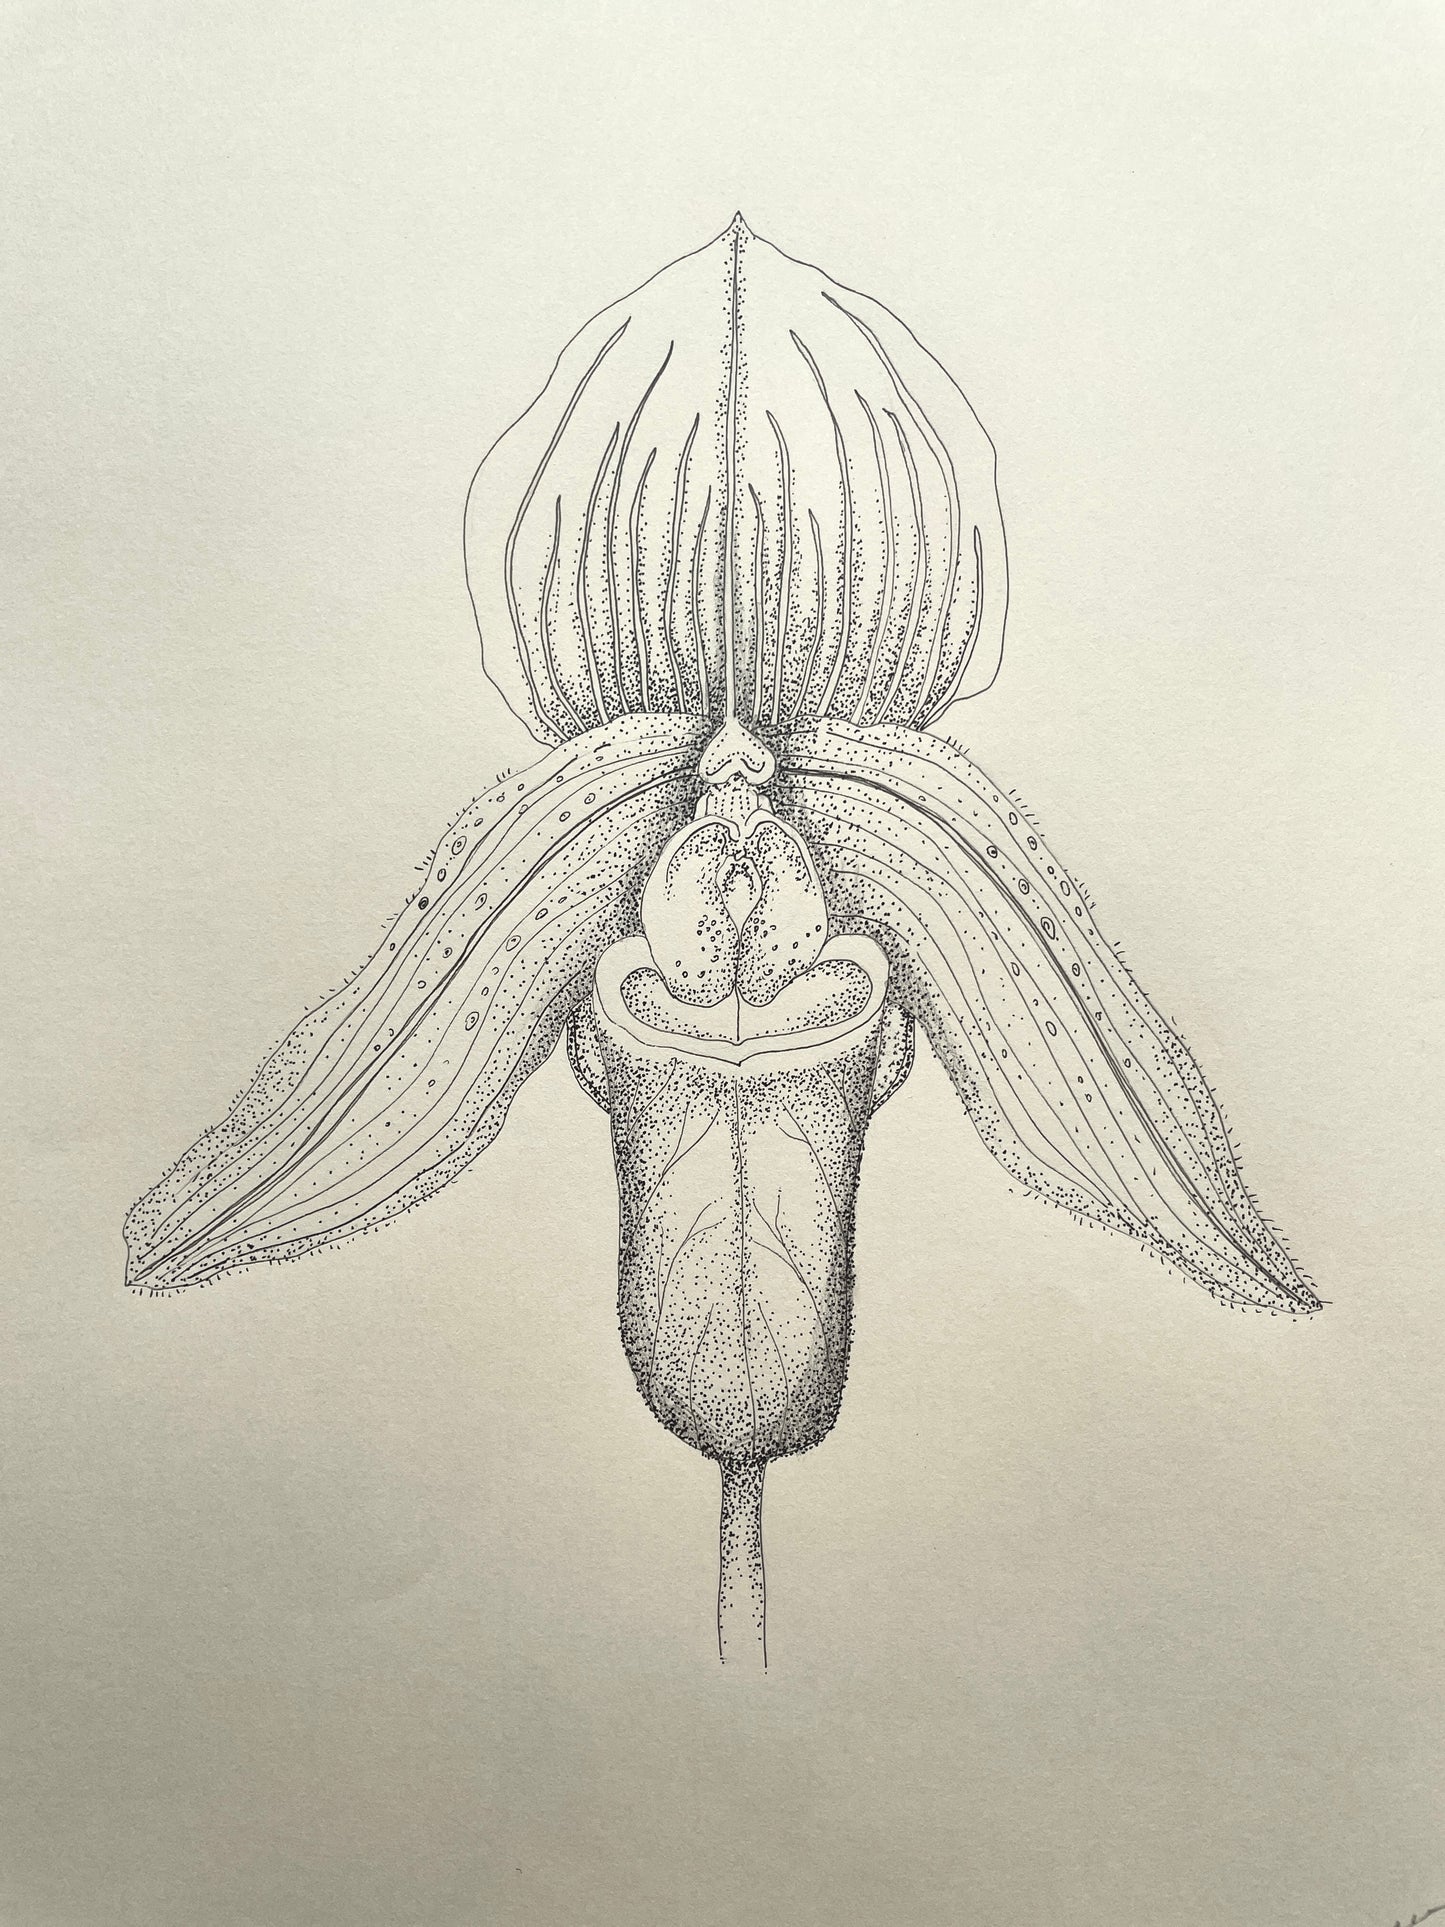 orchid illustration